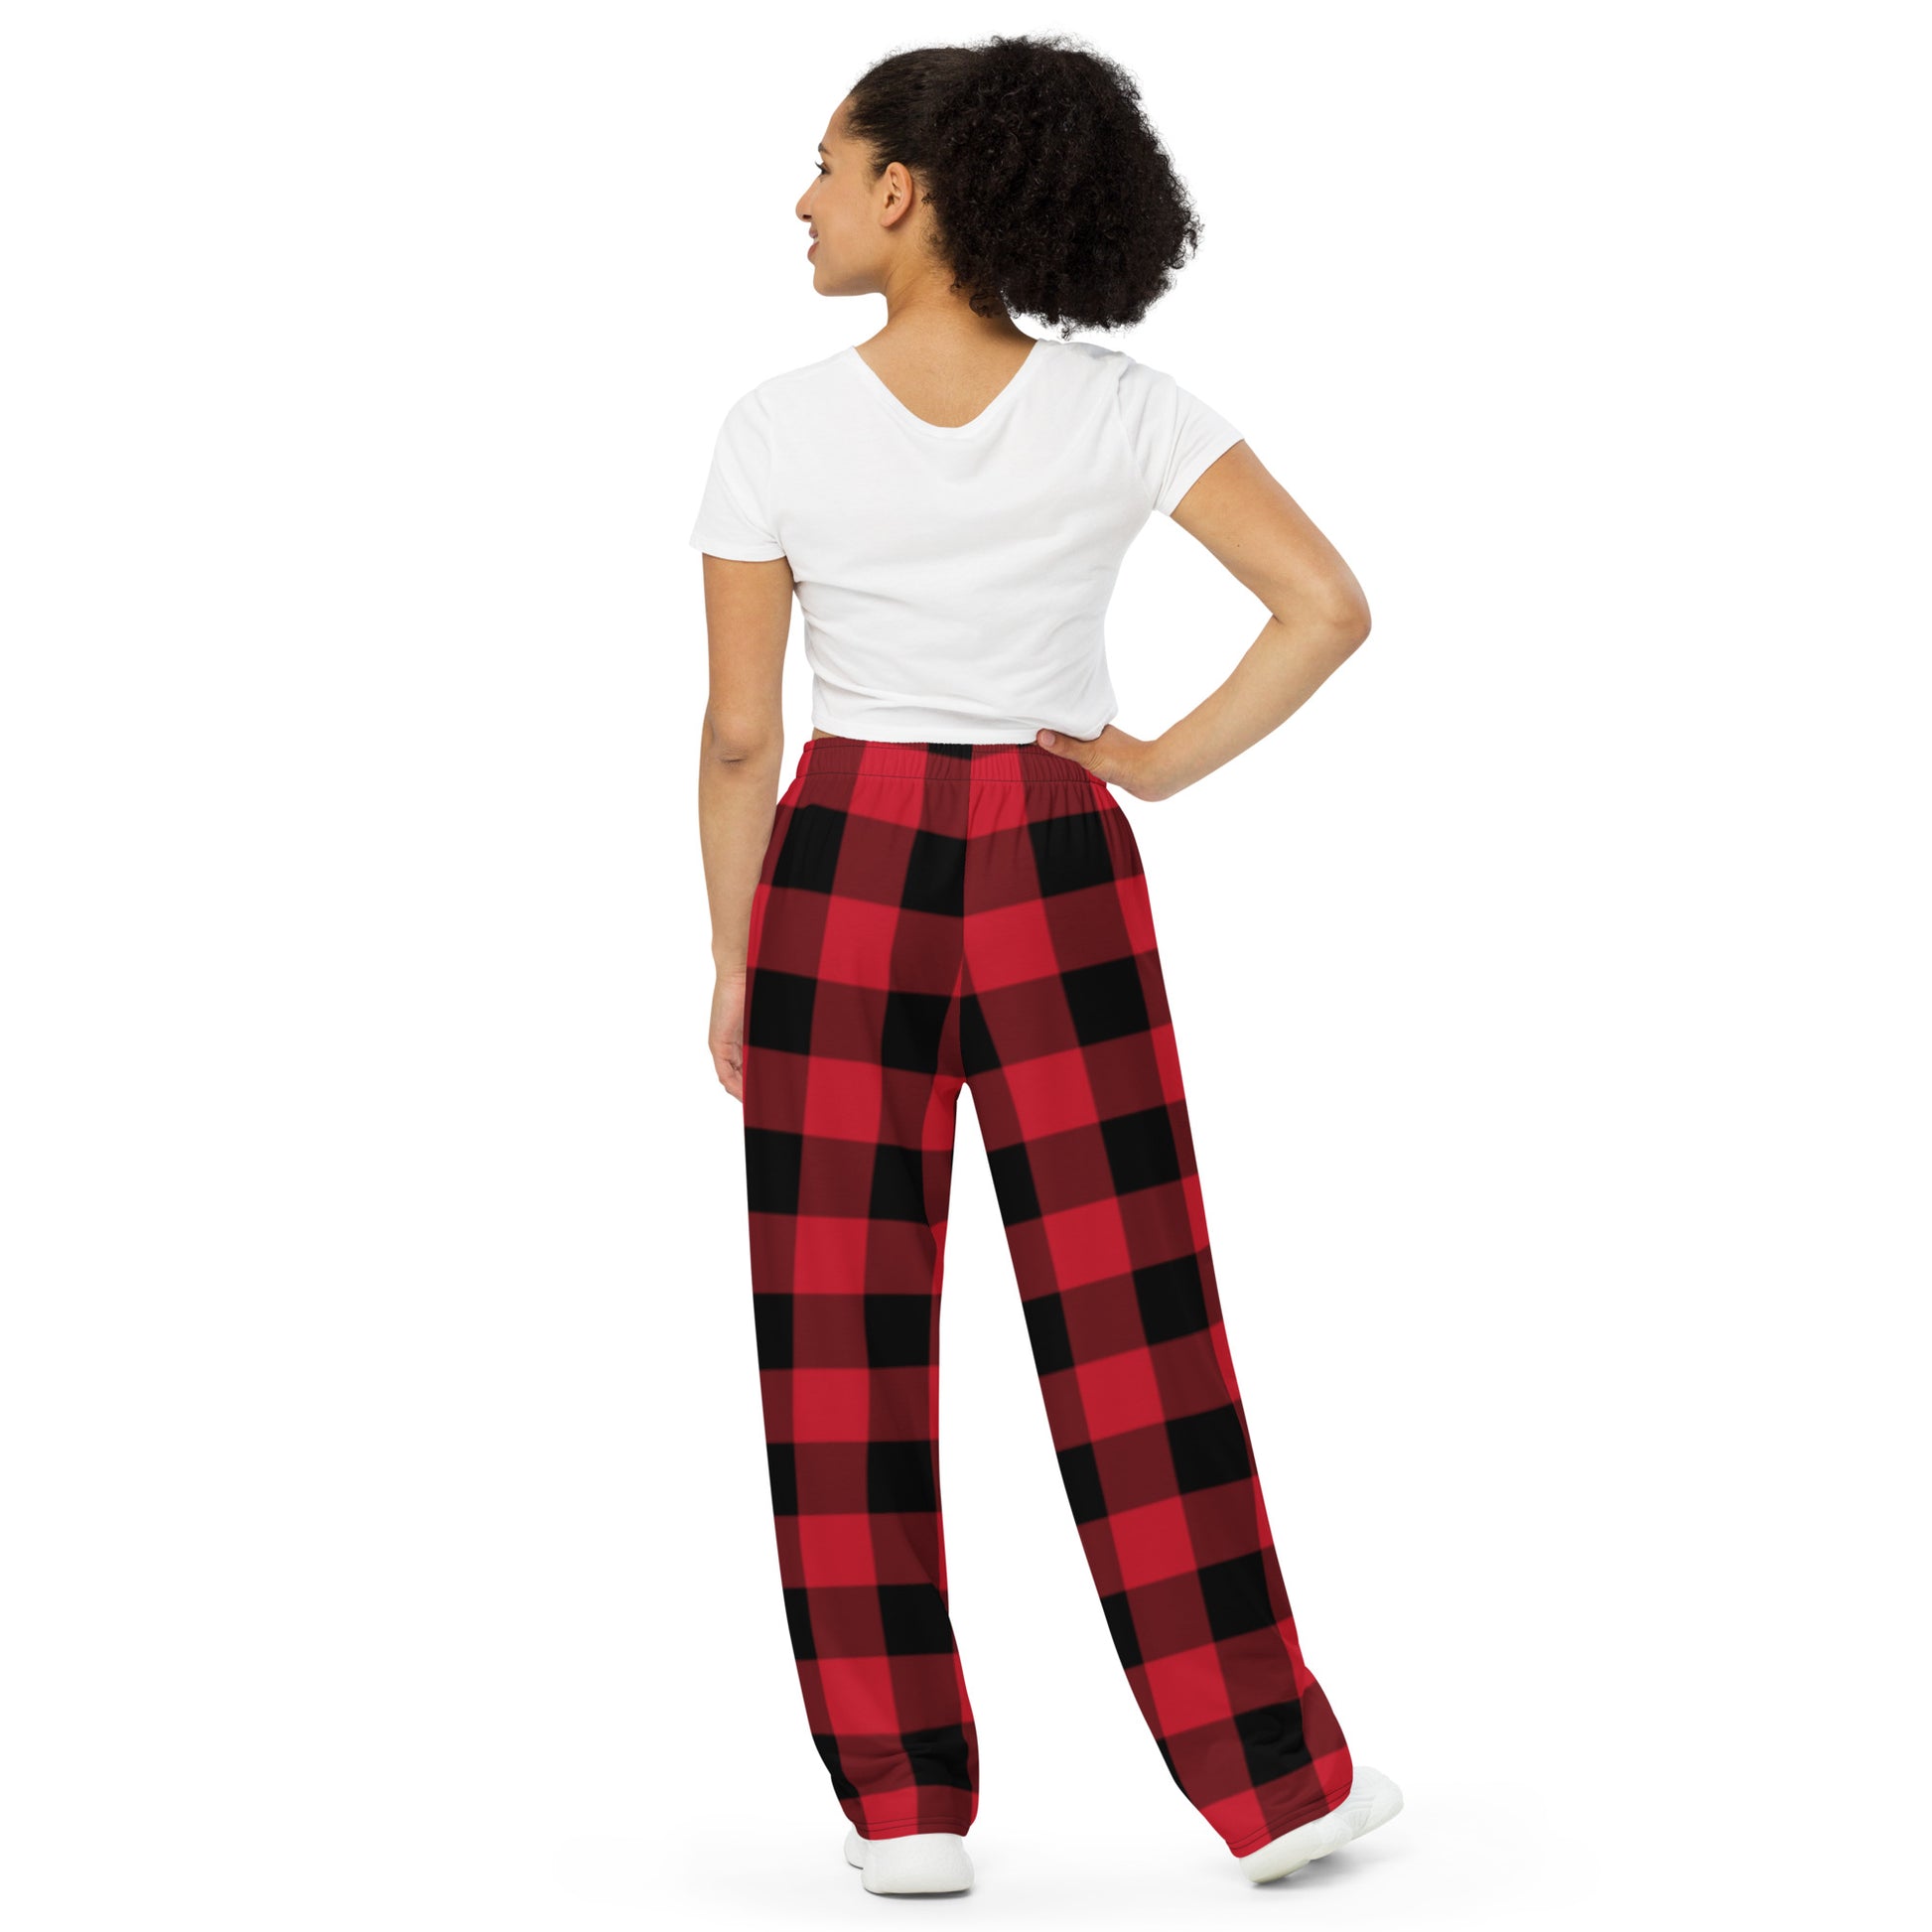 Comfy and Stylish Women's Pajama Pants